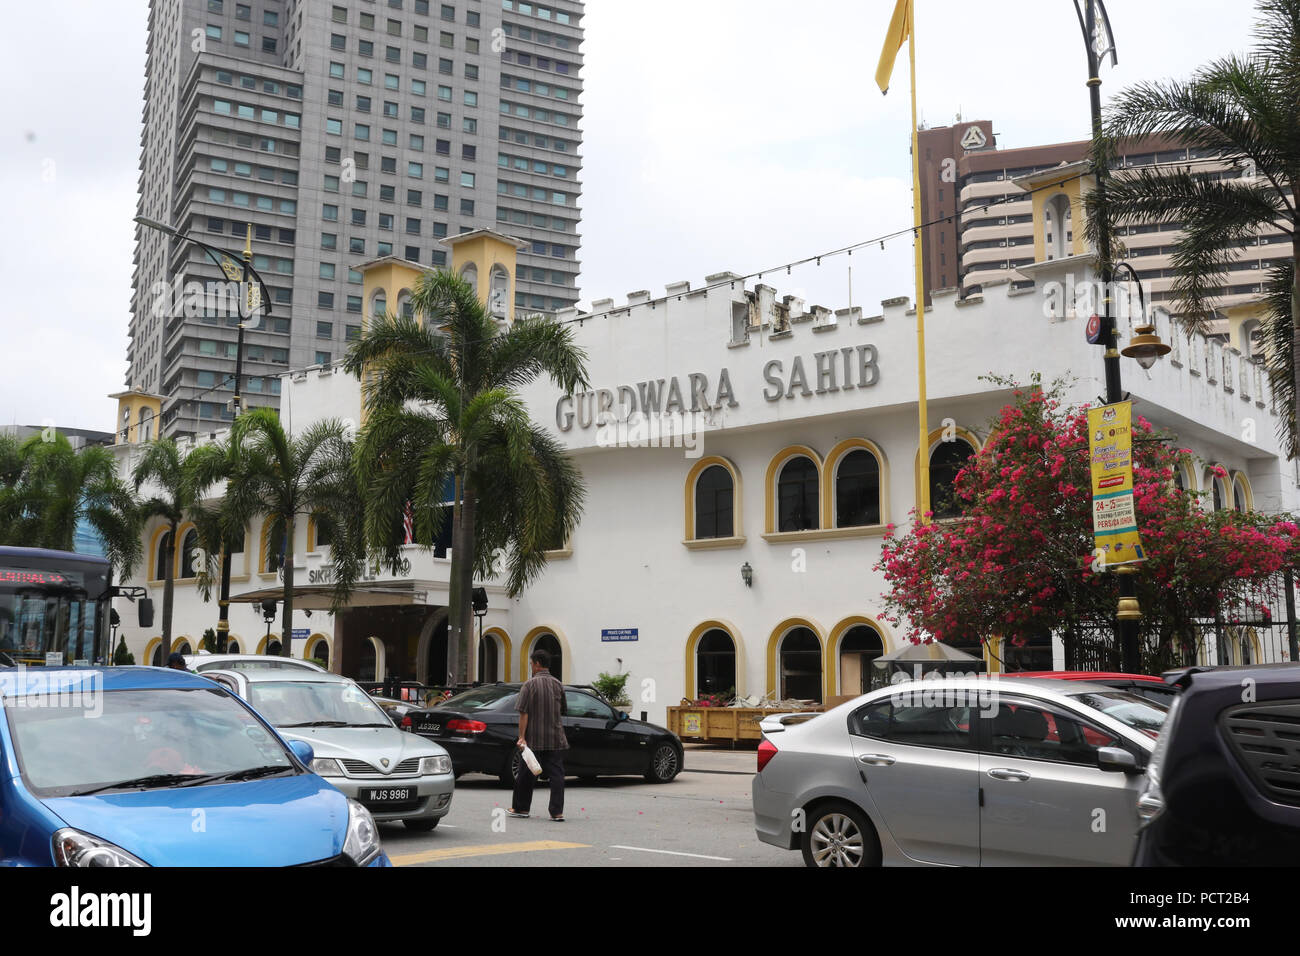 Gurdwara Sahib, Johor Bahru, Malaysia. Stock Photo